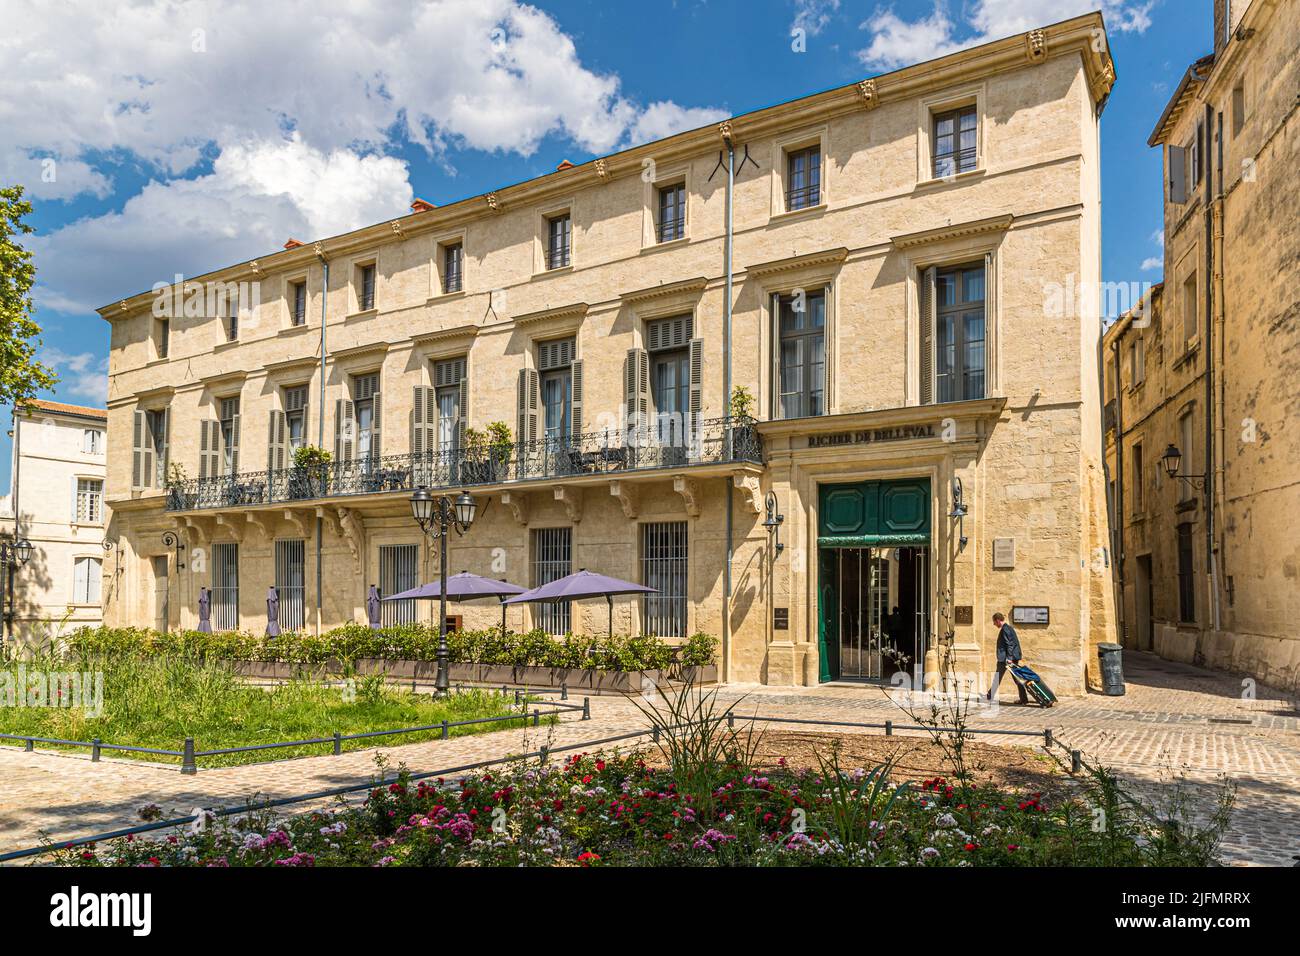 Hotel Richer de Belleval, Montpellier, France Stock Photo